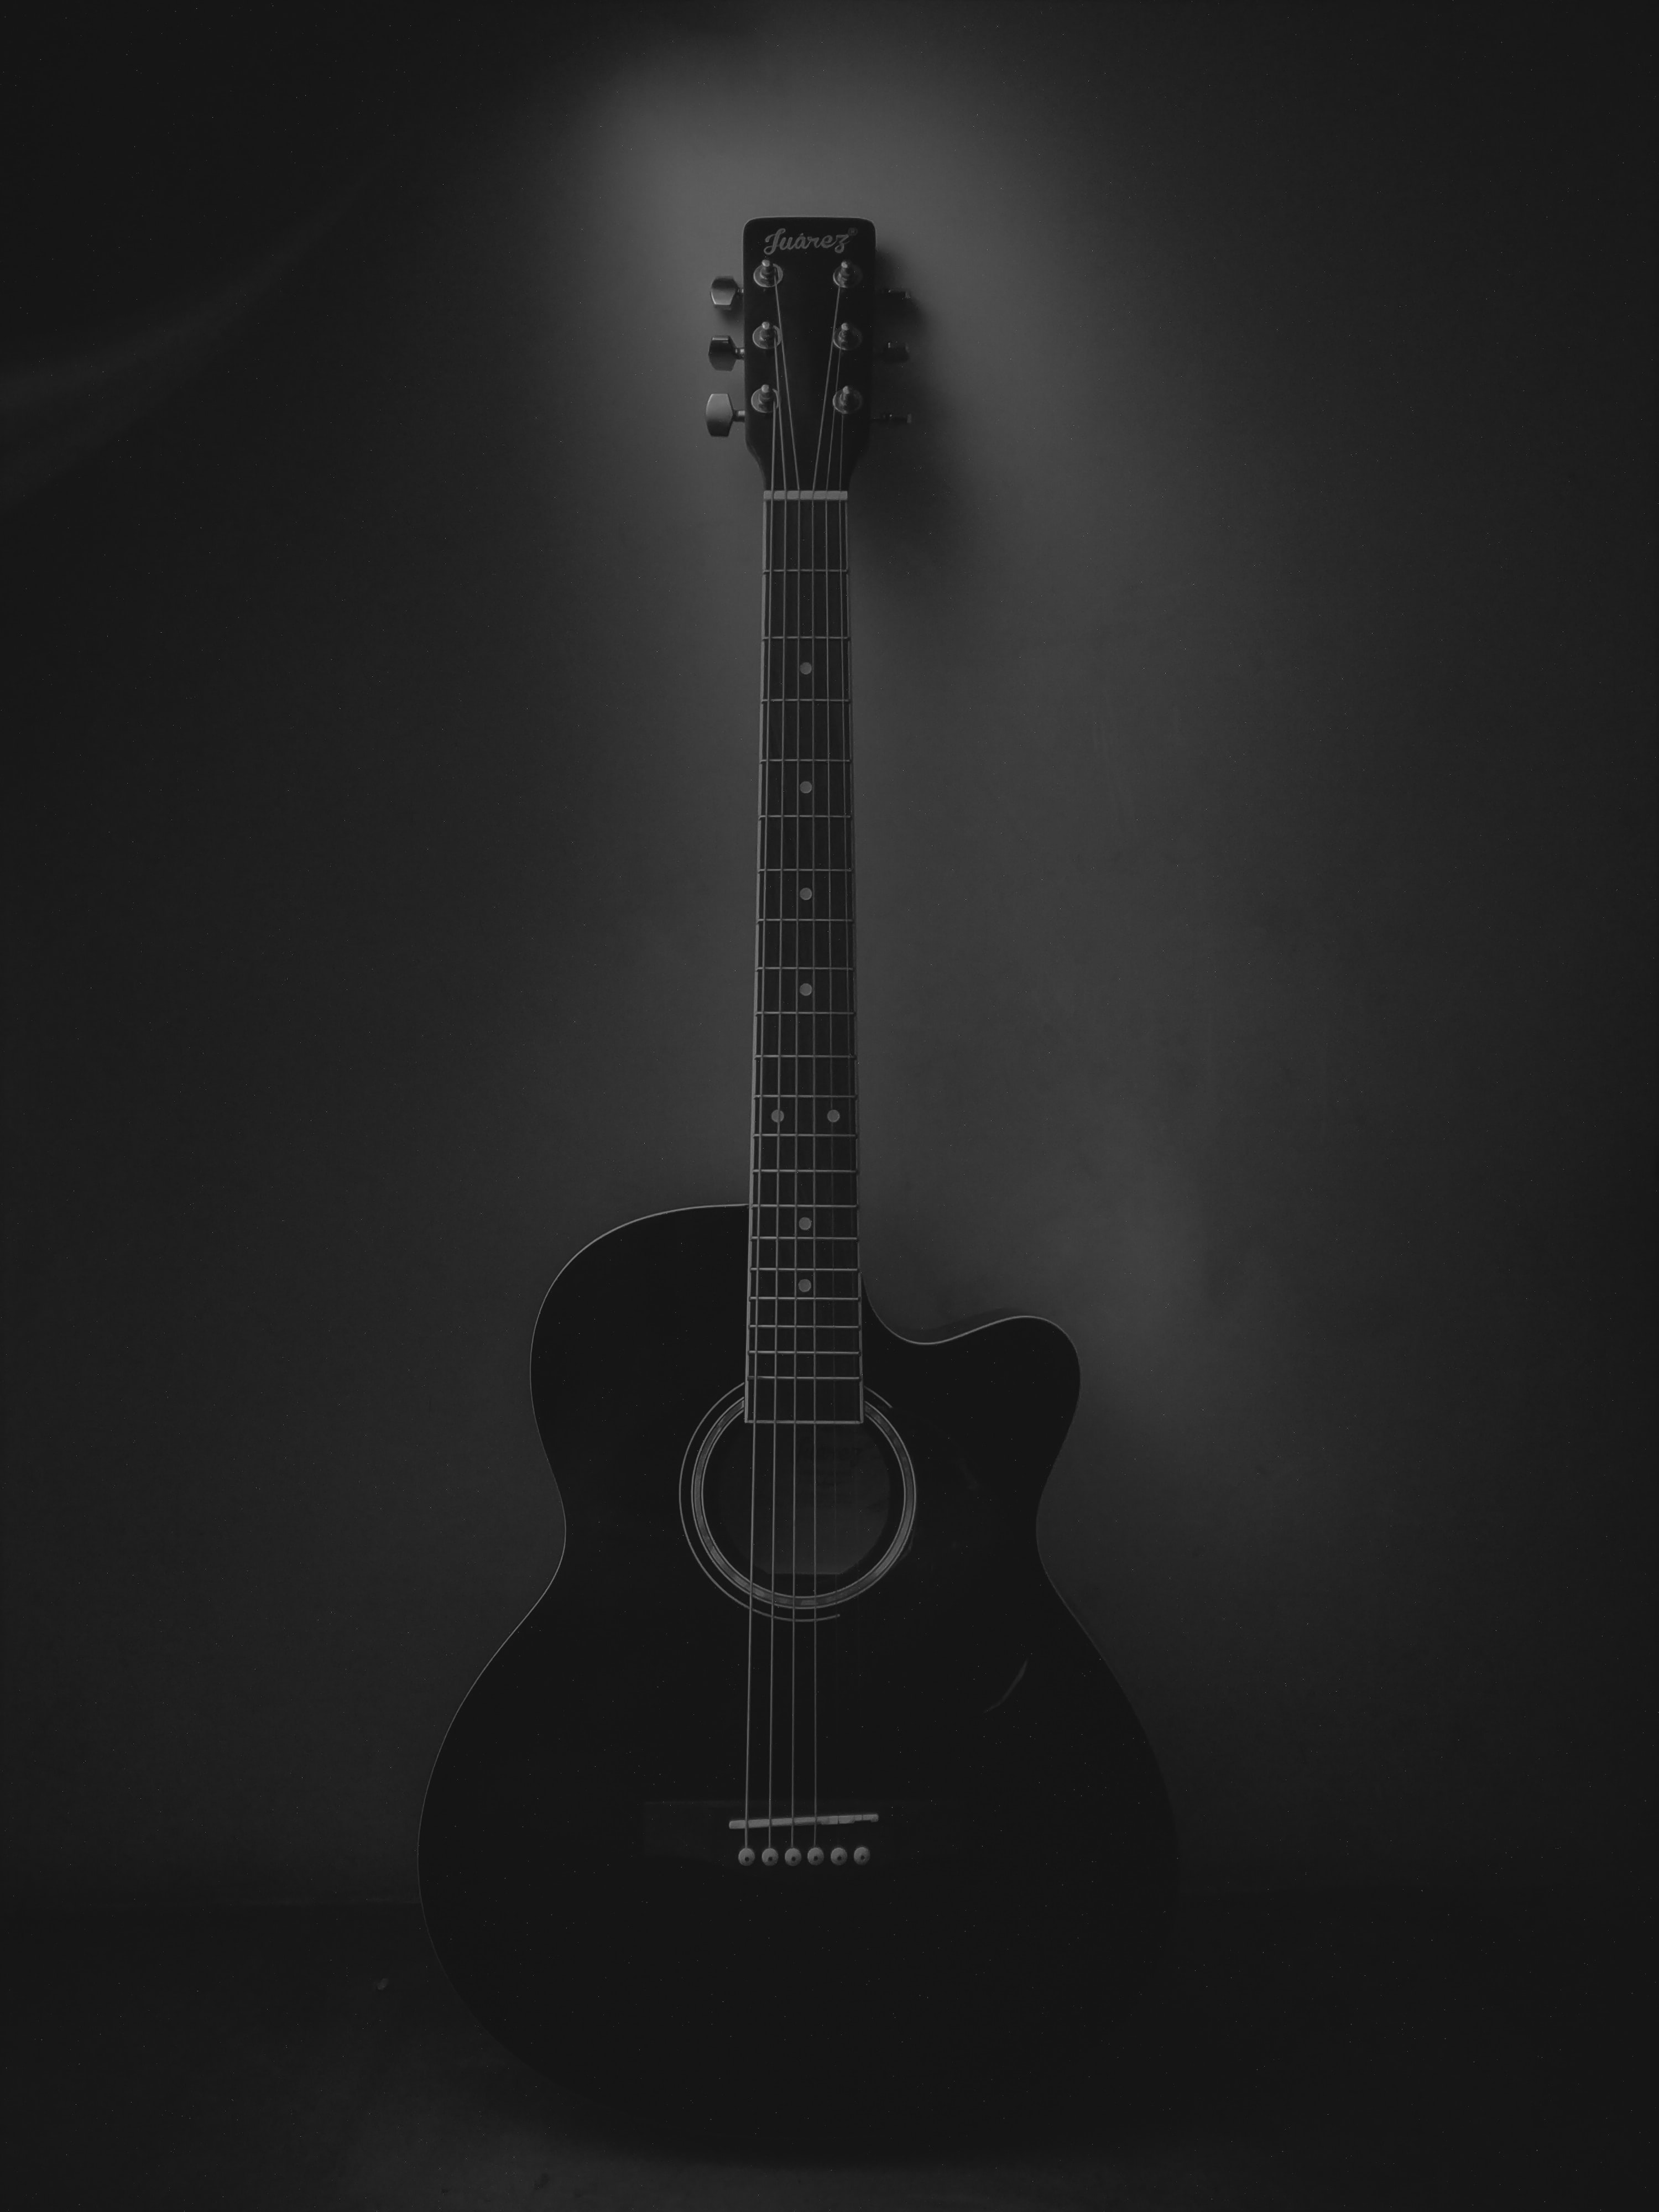 A black guitar against a black background. - Guitar